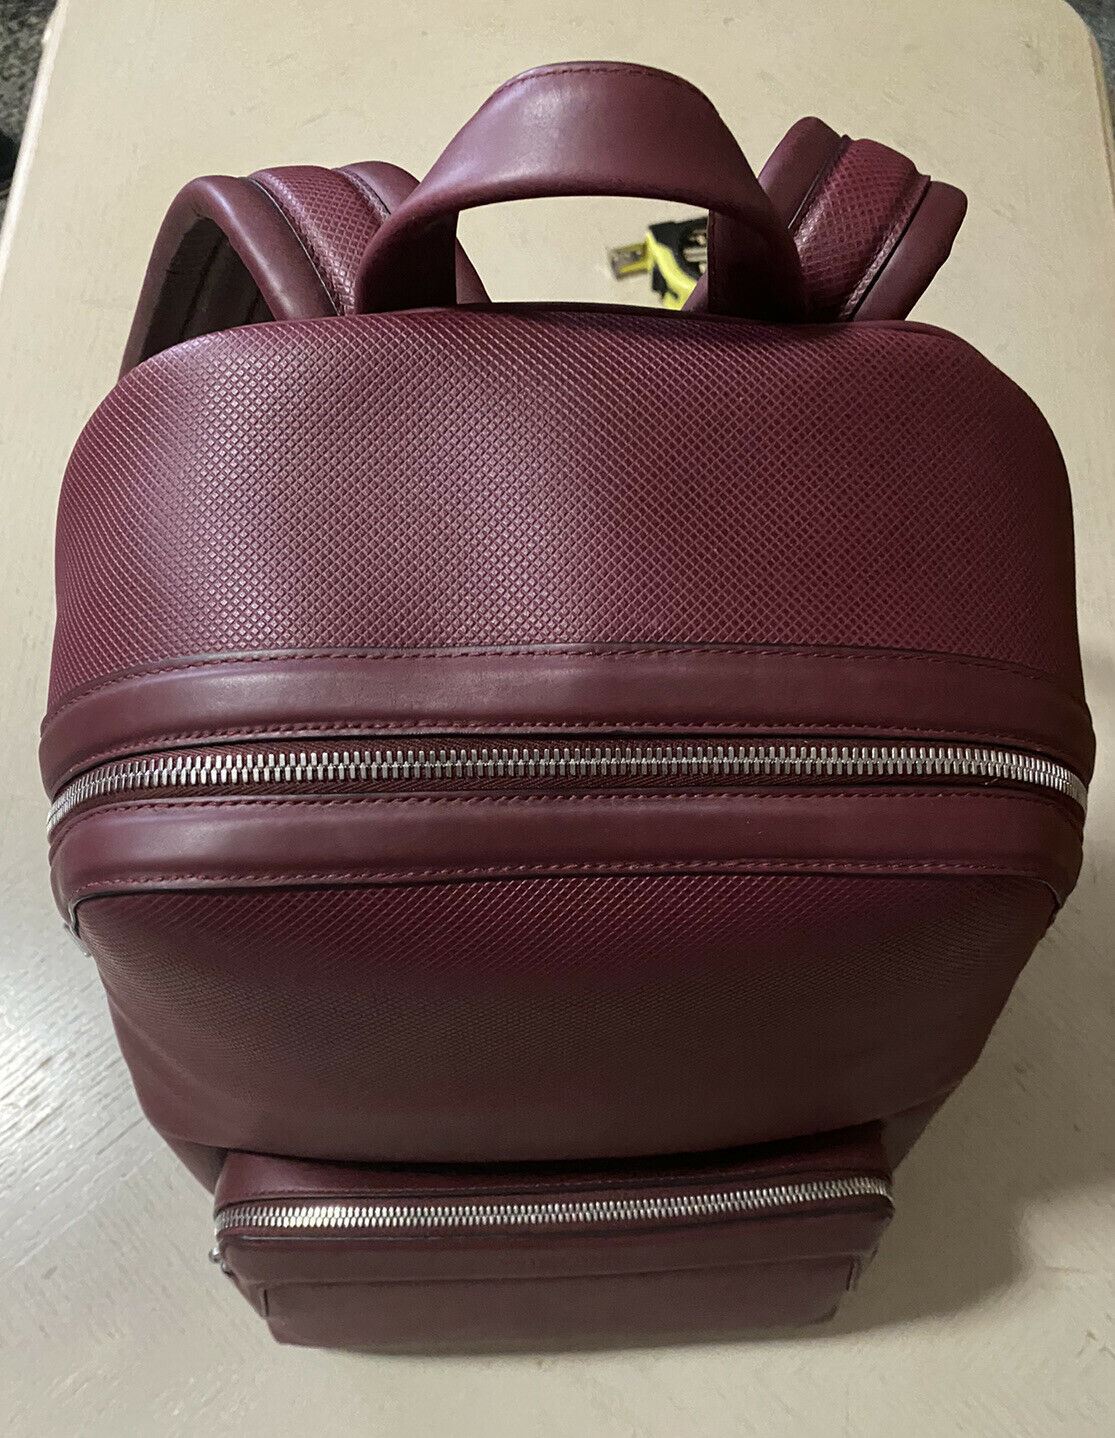 New $2550 Bottega Veneta leather Backpack Marco Polo 585931 Burgundy Italy